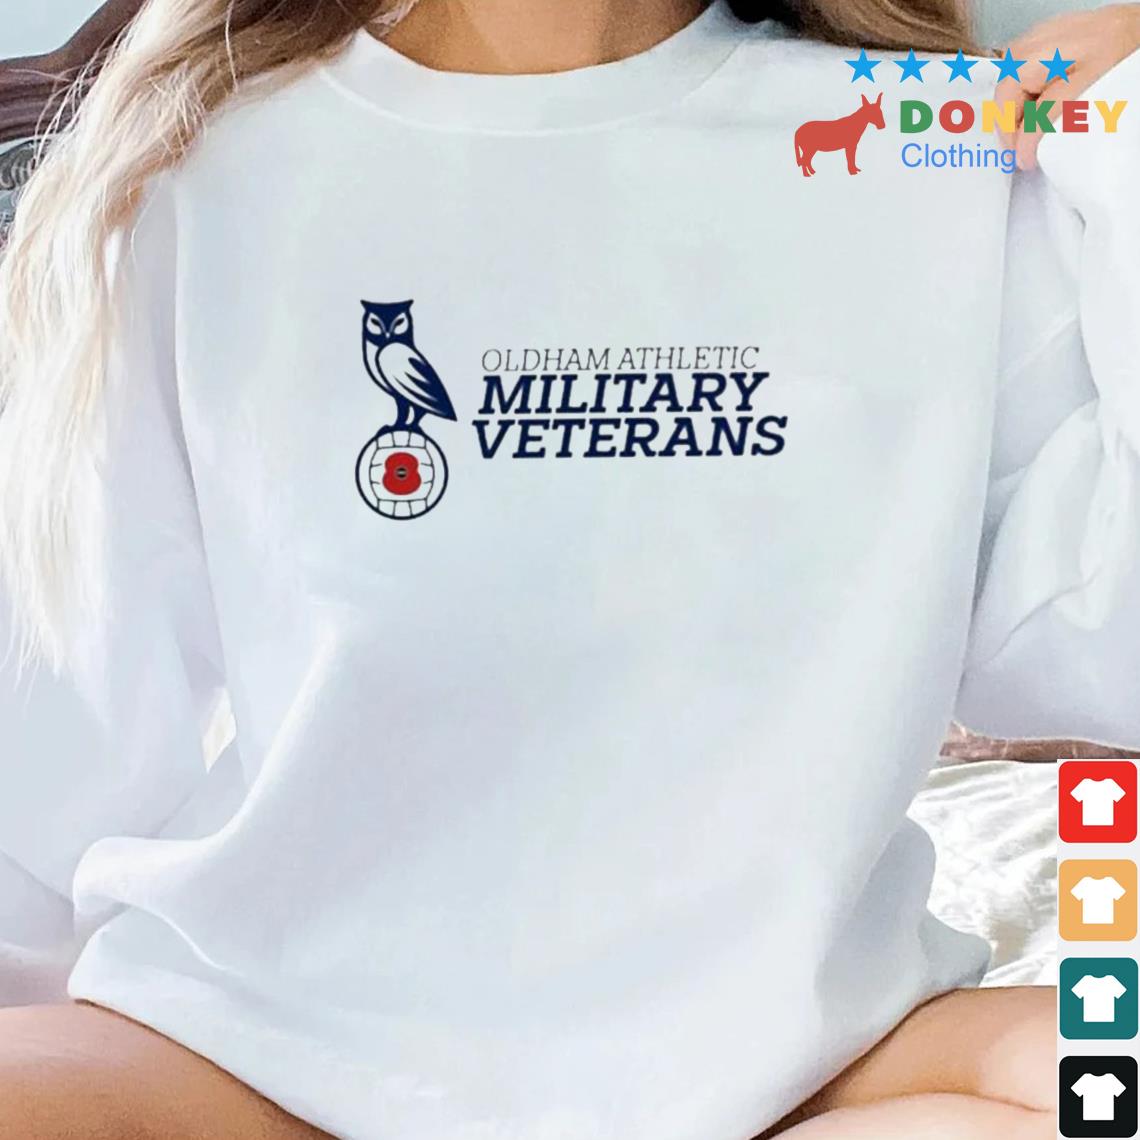 Oldham Athletic A.F.C. Oldham Athletic Military Veterans Shirt